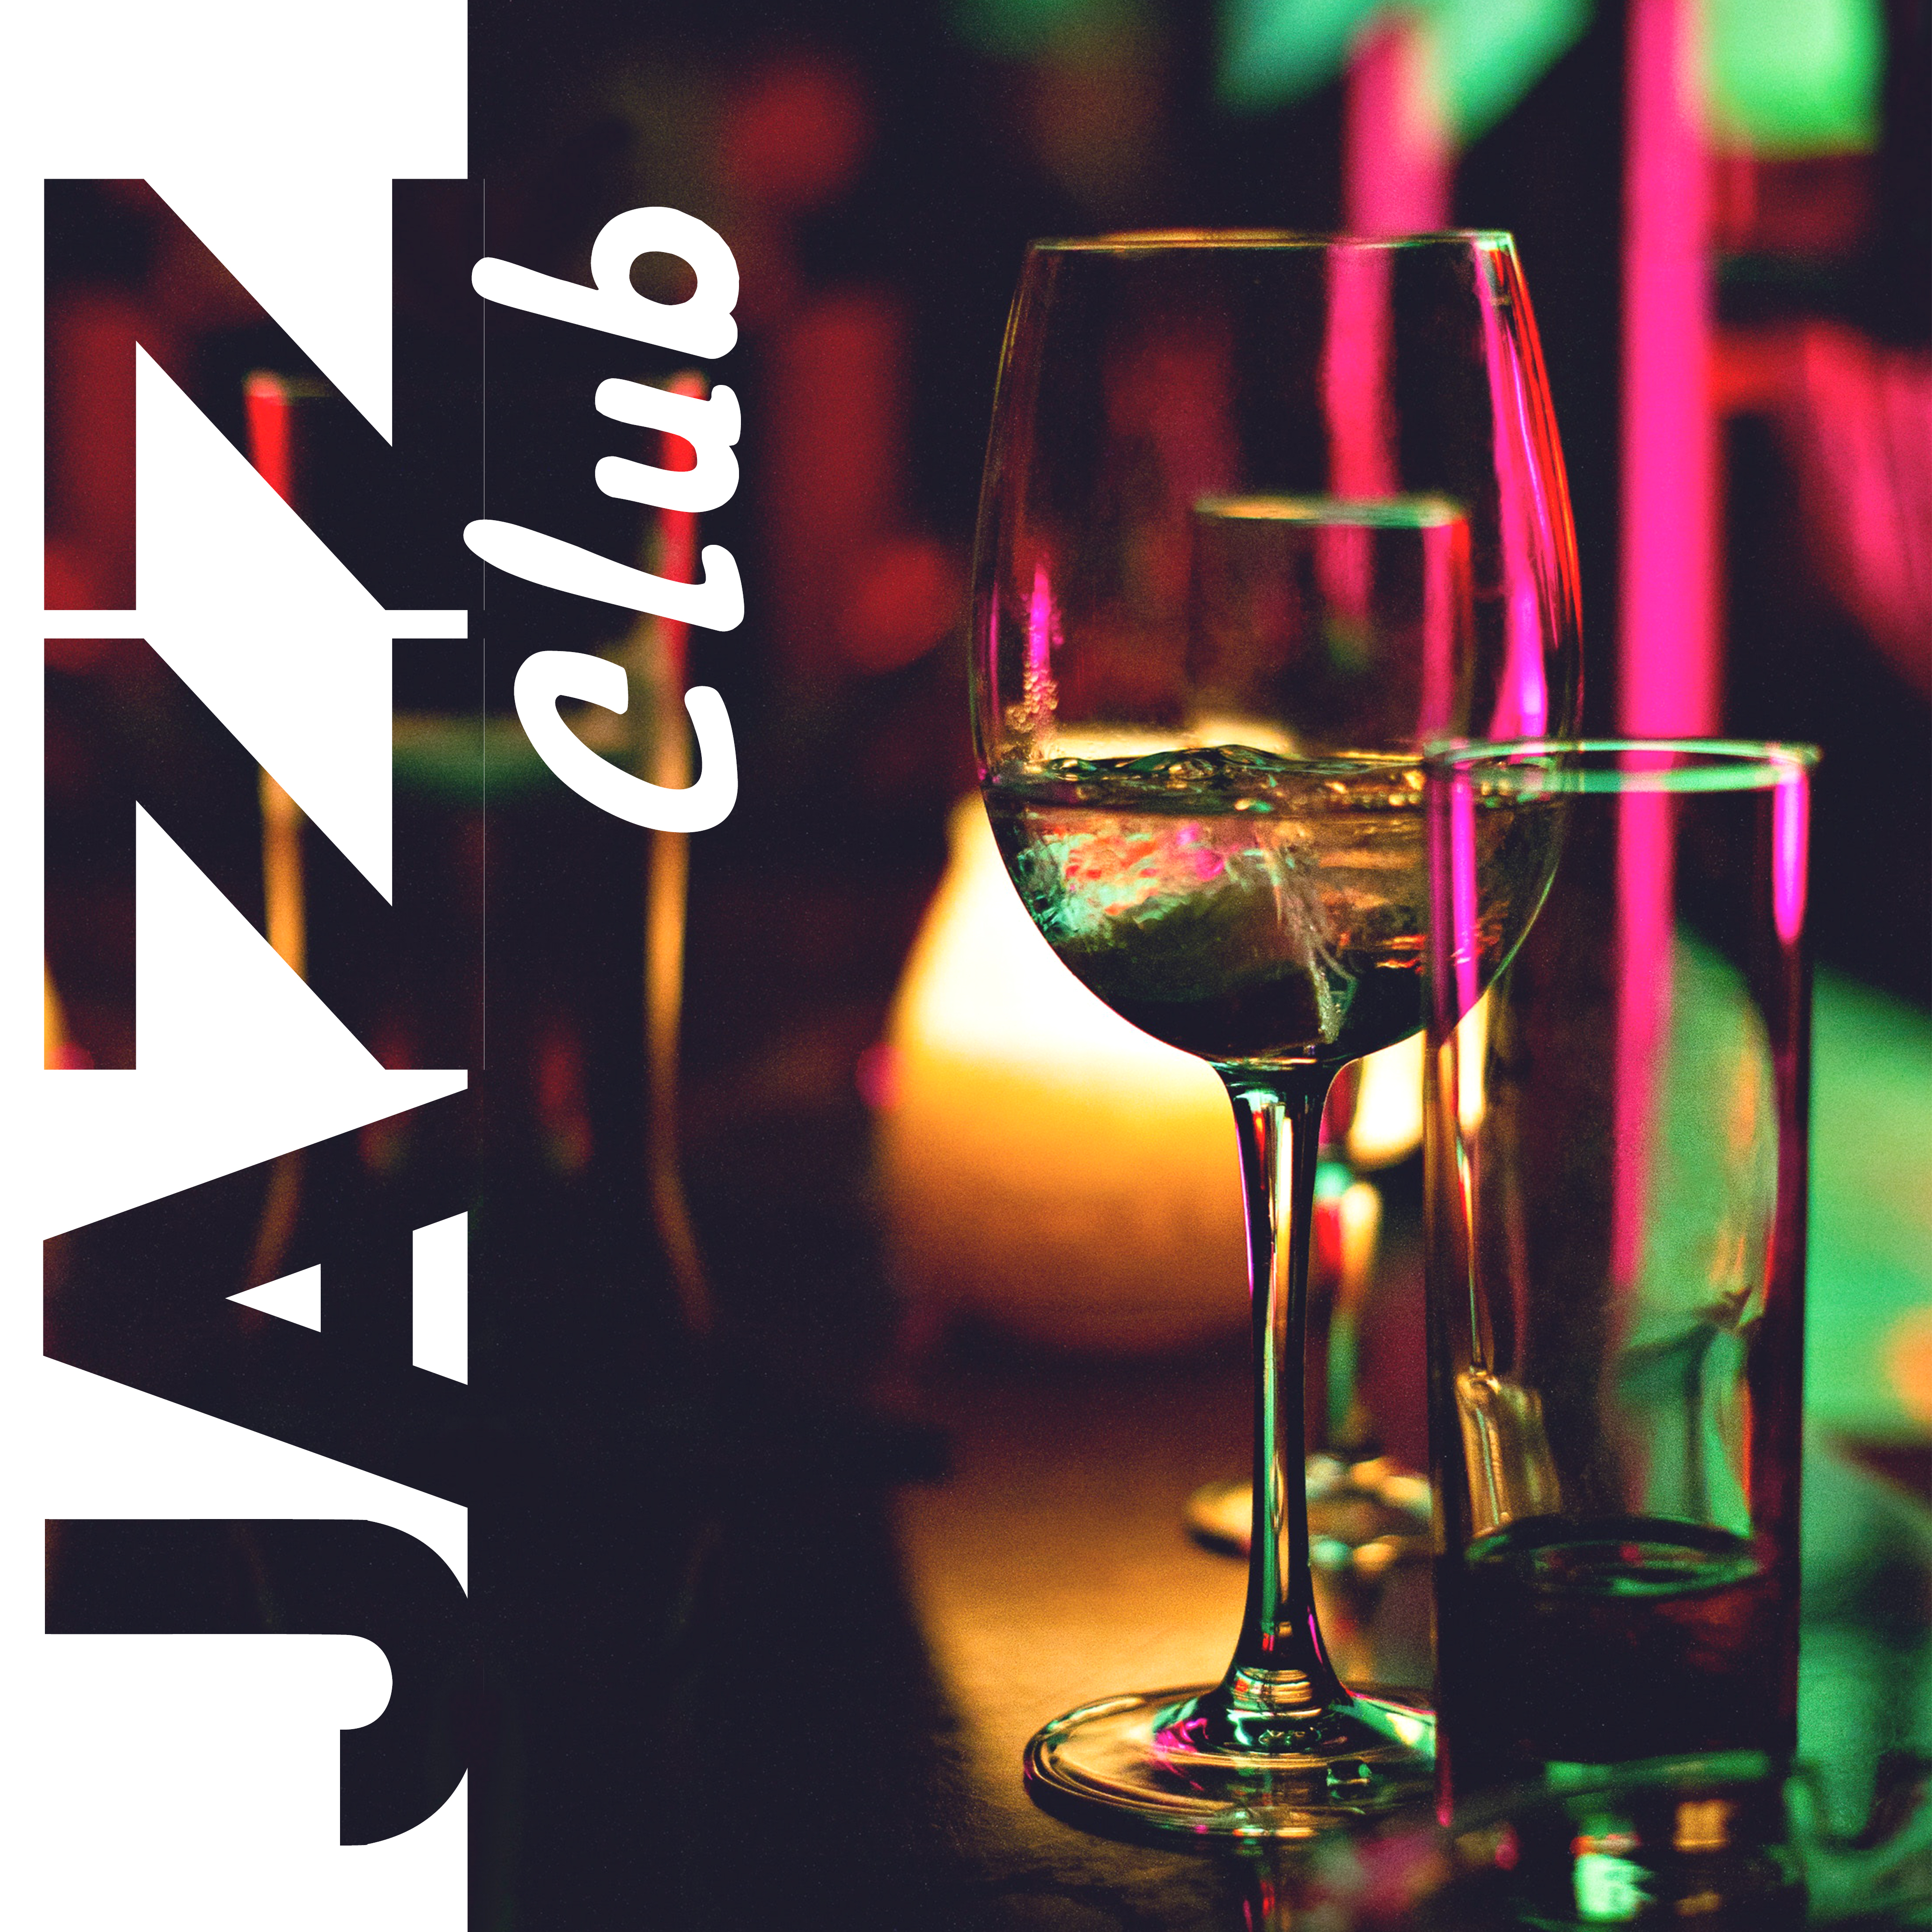 Jazz Club – Piano Bar, Restaurant Jazz, Pure Chill, Ambient Jazz, Instrumental Music to Rest